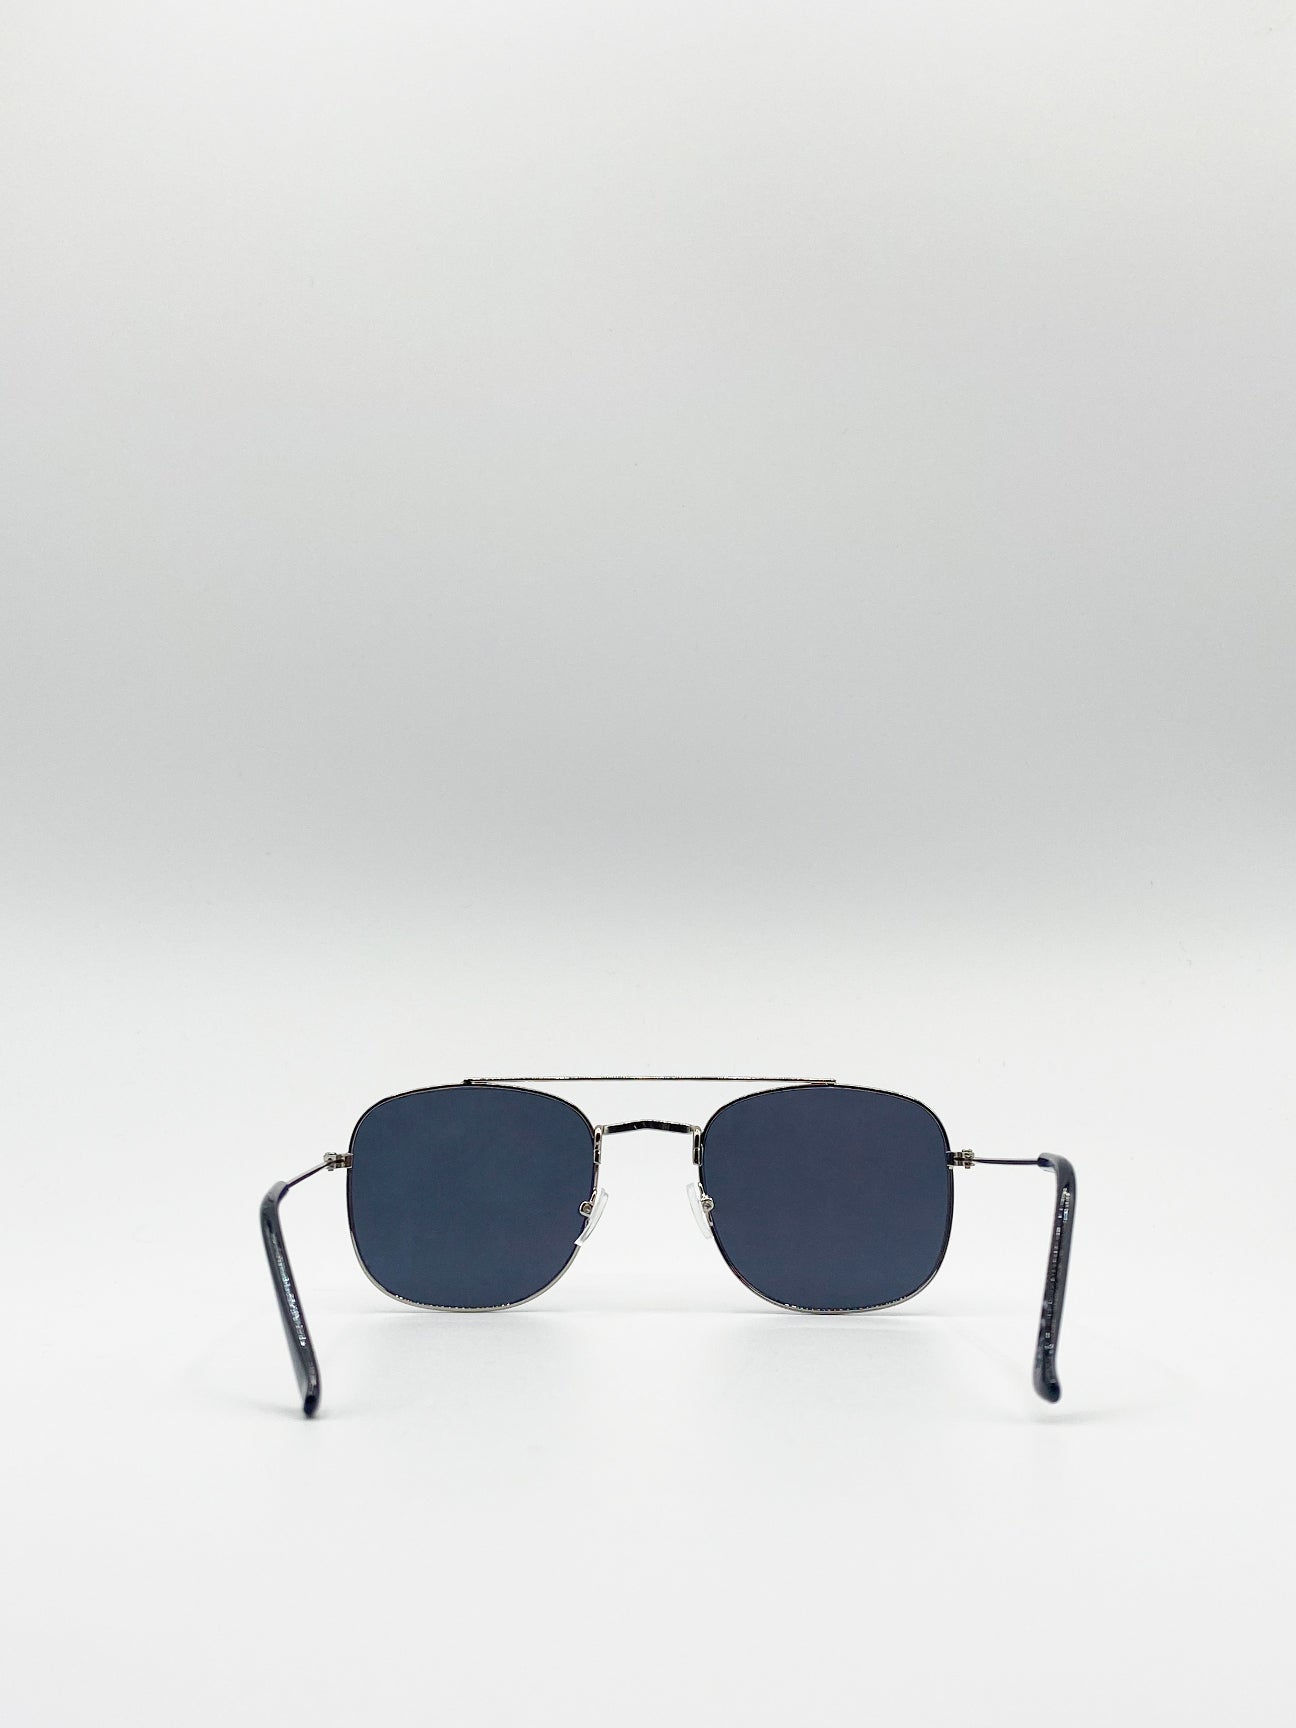 Silver Aviator Sunglasses with Black Lenses